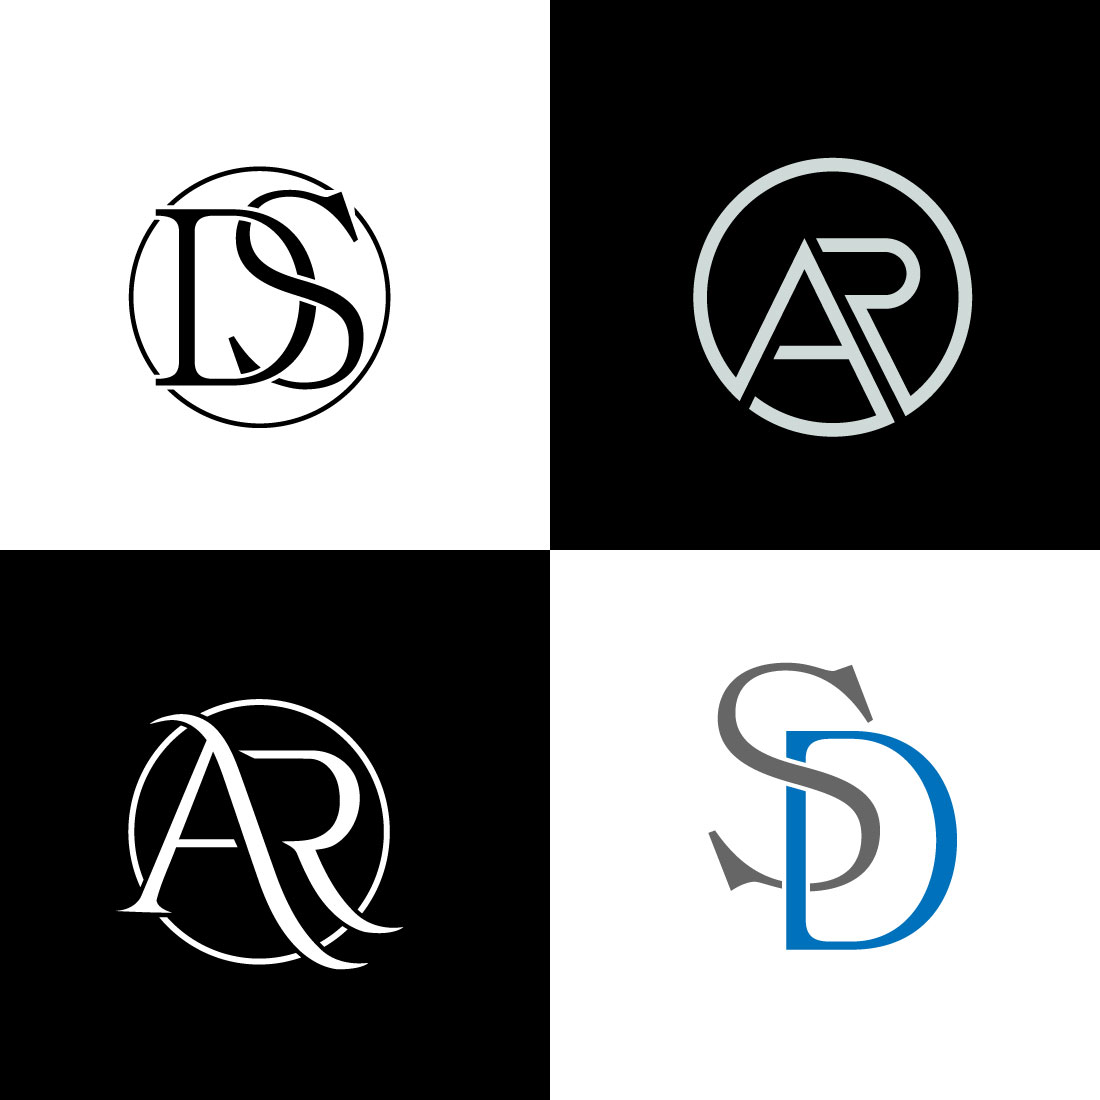 Letter Logos Templates Design Bundle cover image.